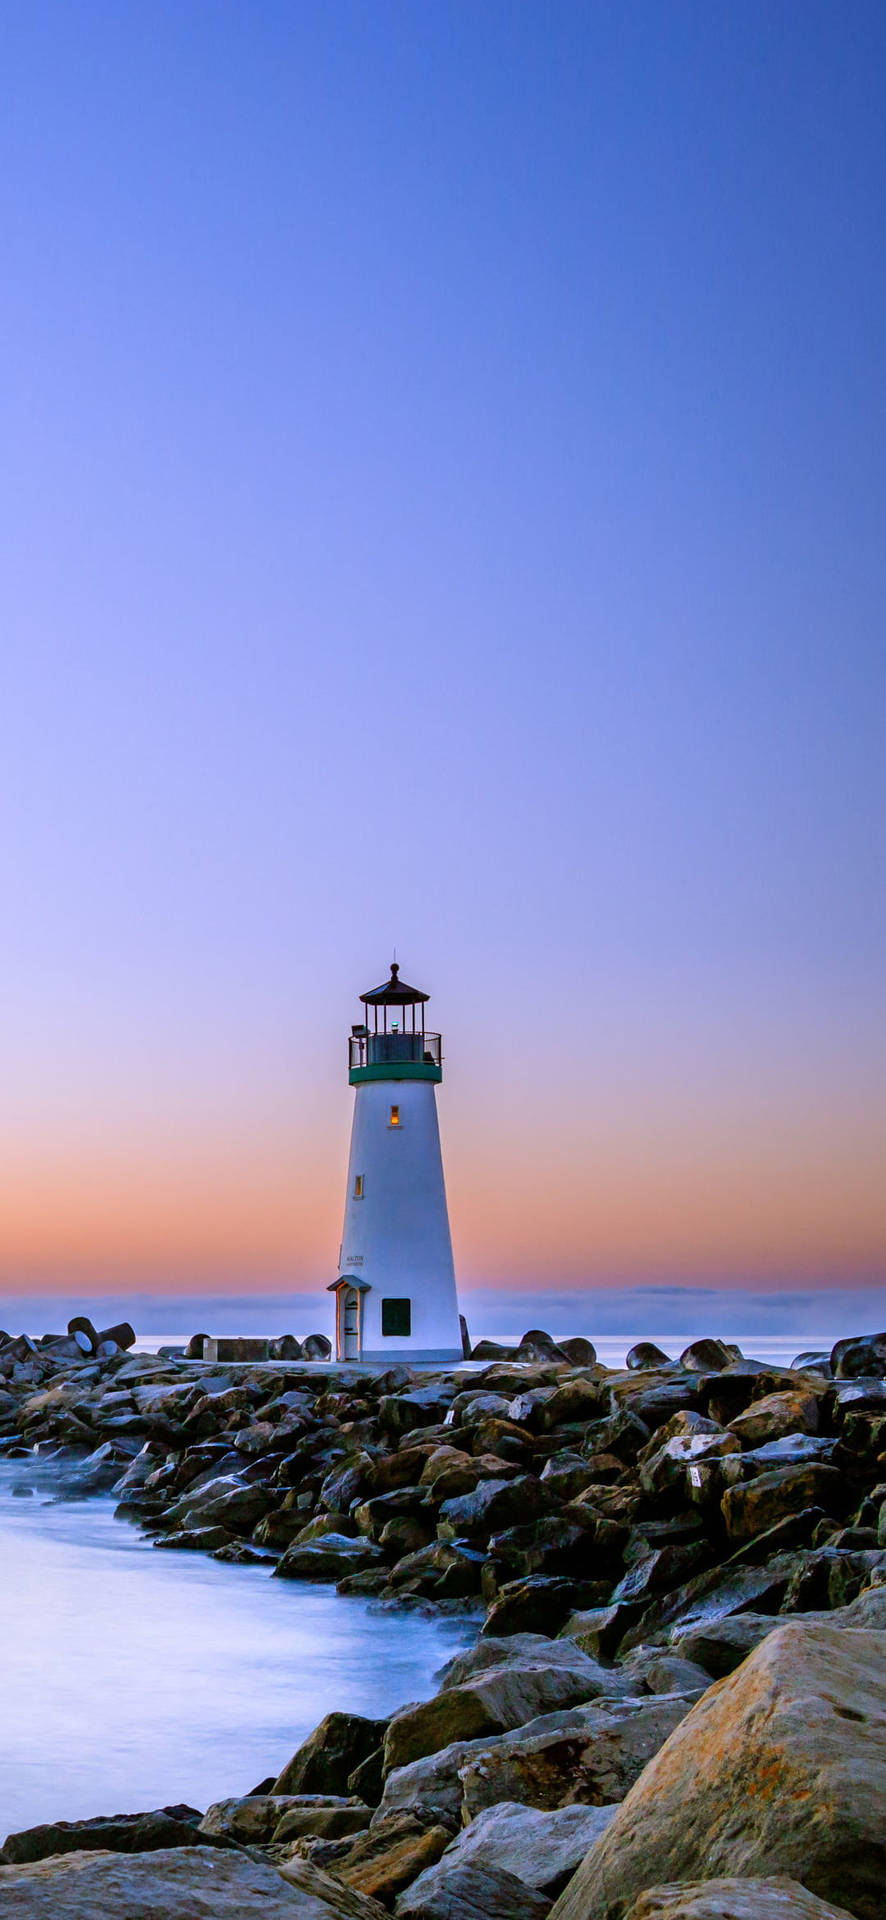 Beach 4k Iphone Lighthouse At Sunset